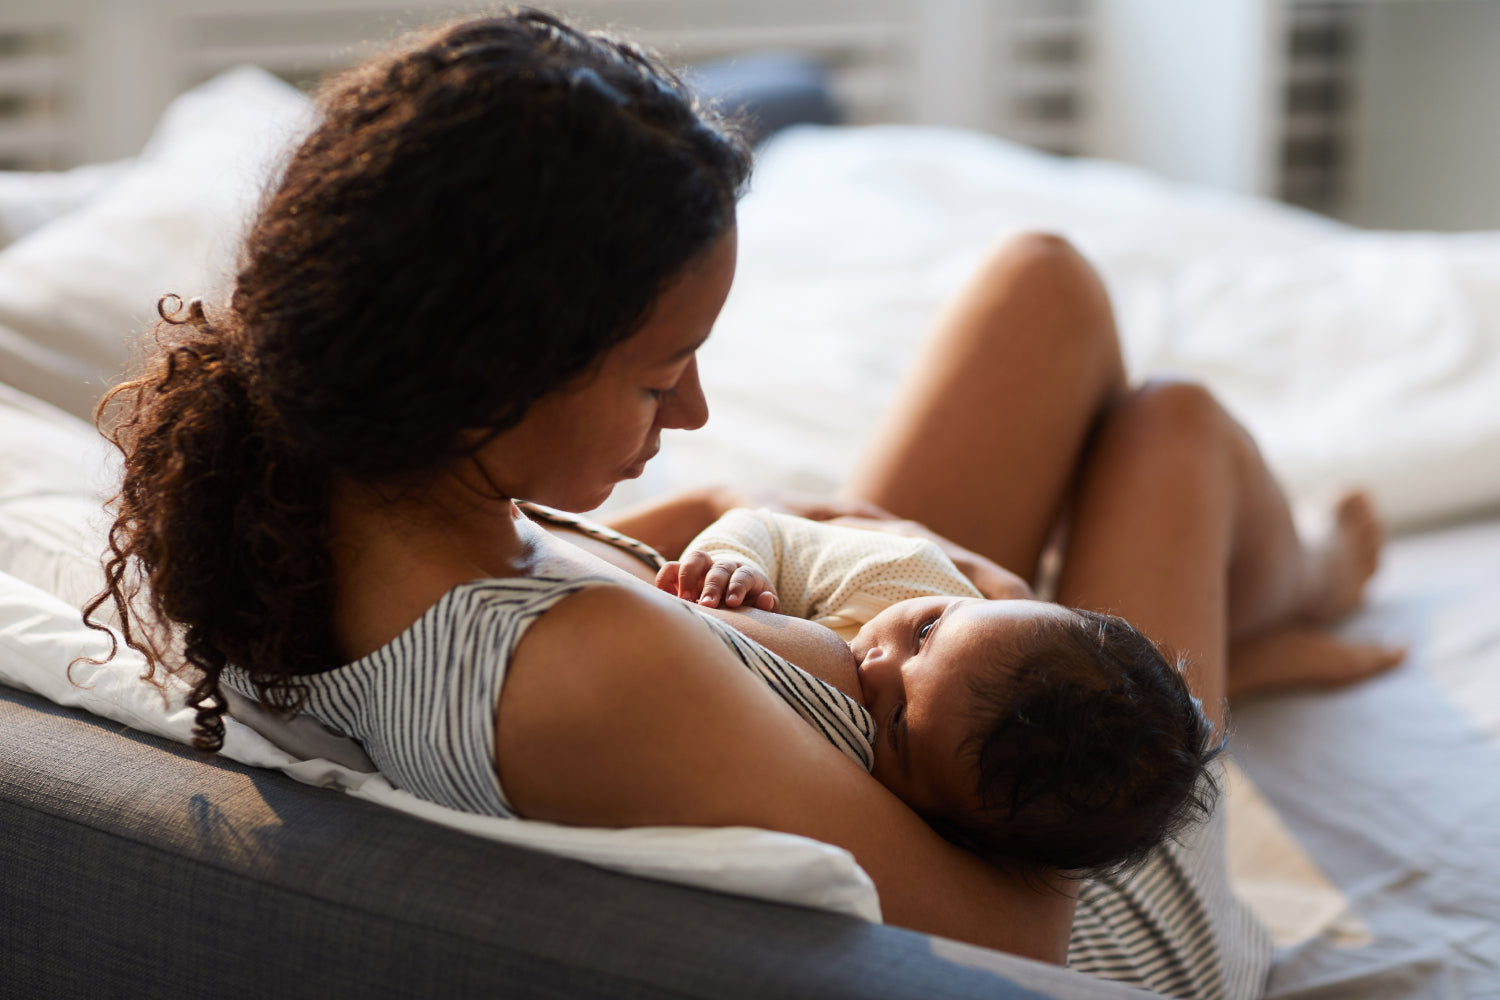 Breast Milk Production: How Does Breastfeeding Work?